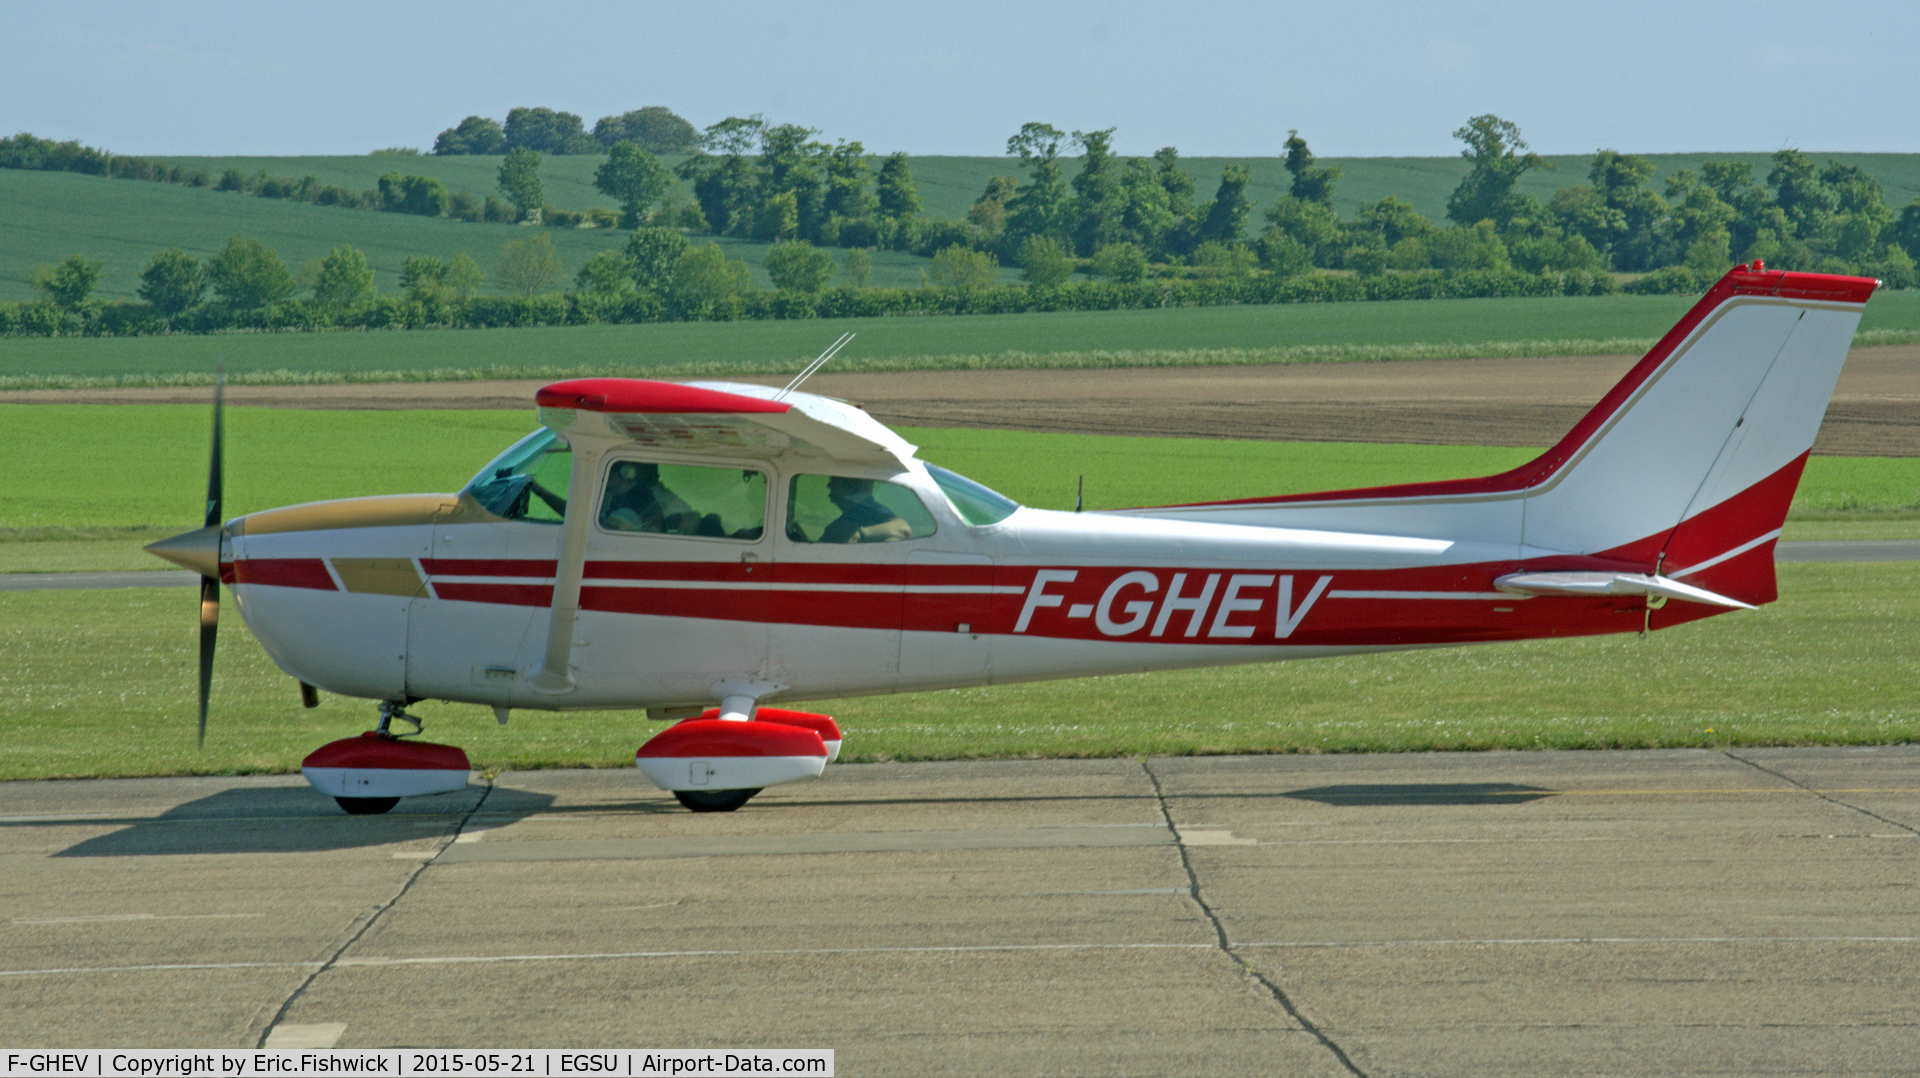 F-GHEV, Reims F172N Skyhawk C/N 172-69730, 1. F-GHEV at Duxford Airfield.